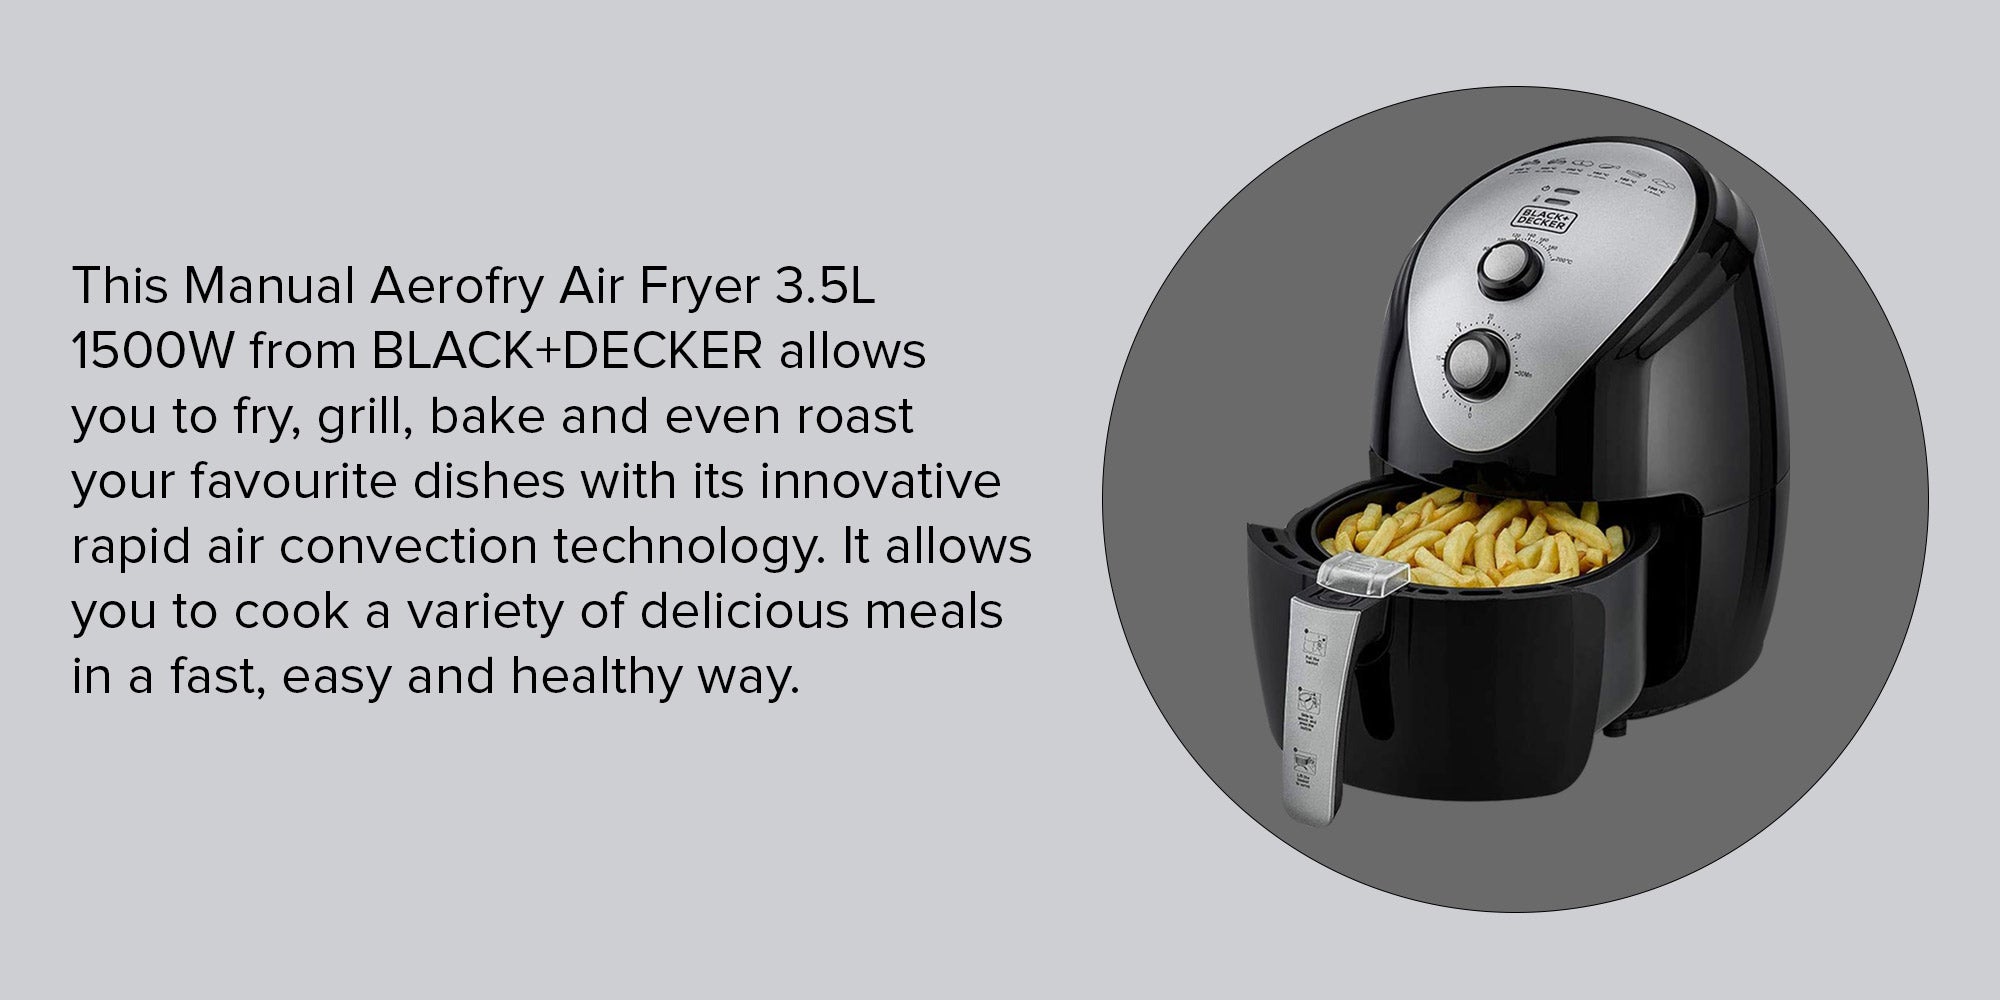 BLACK & DECKER 3.5L Manual Aerofry Air Fryer with Rapid Air Convection